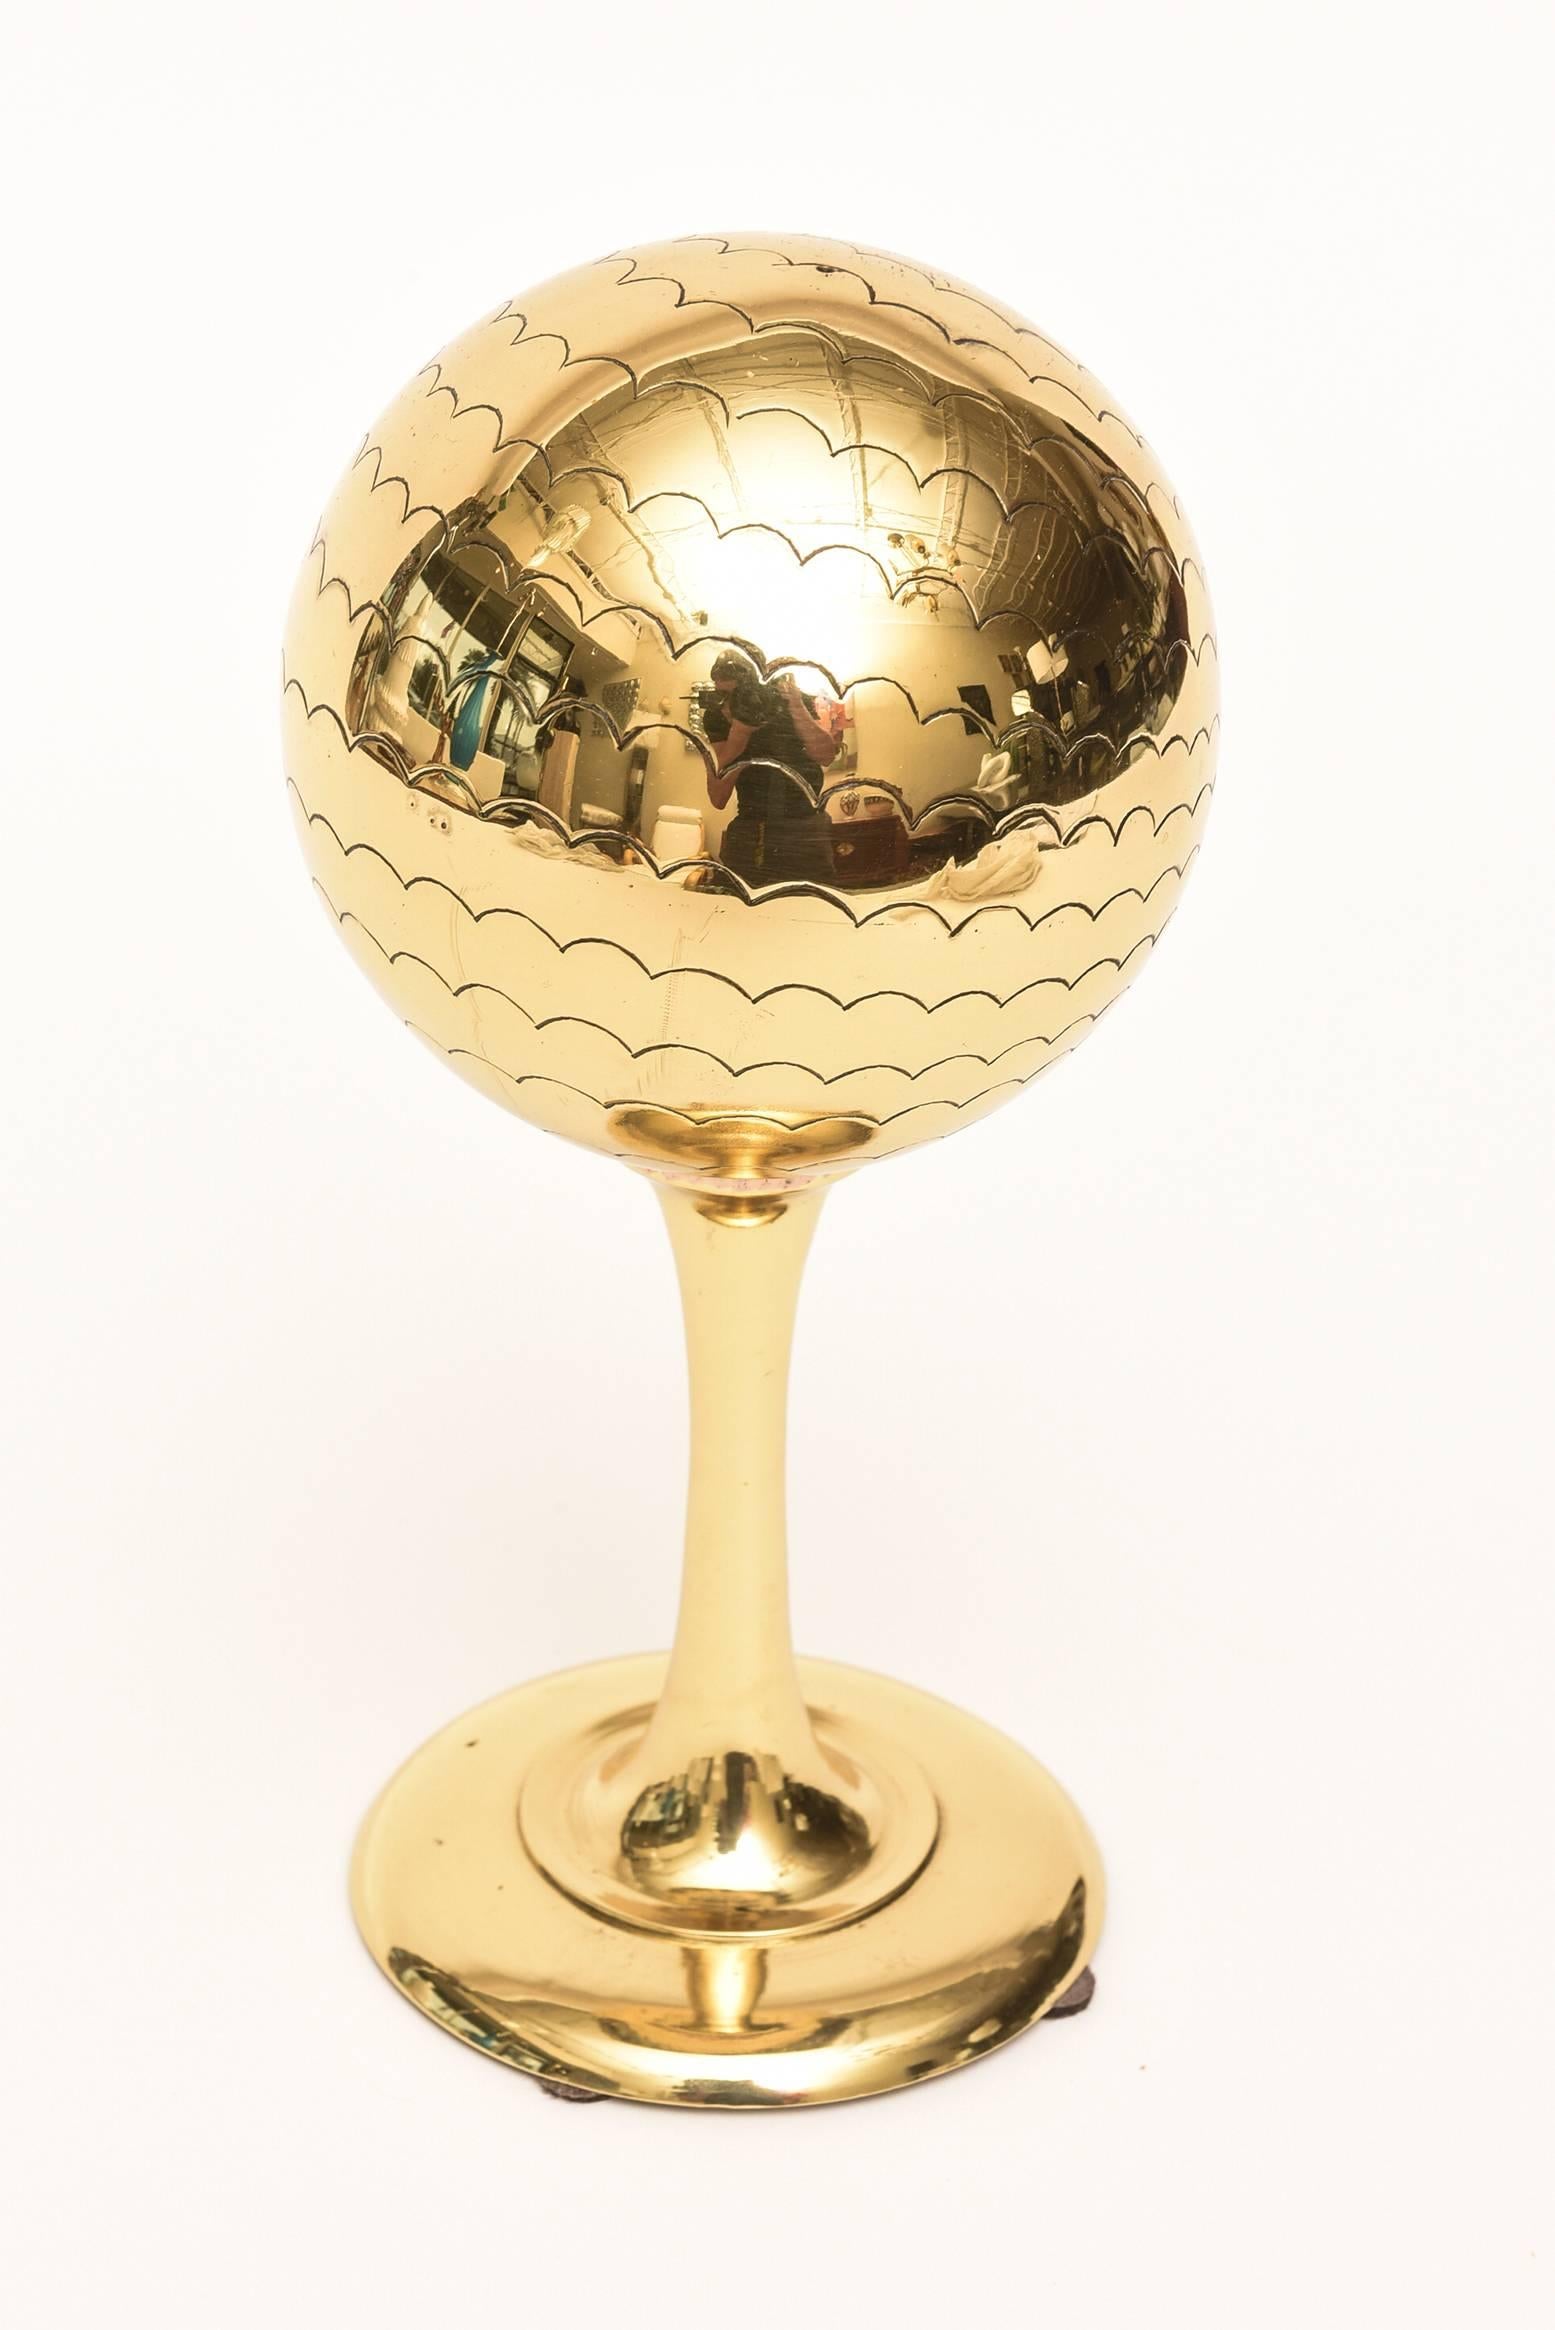 Mid-20th Century Brass Globe Sculpture or Object Mid-Century Modern Desk Accessory